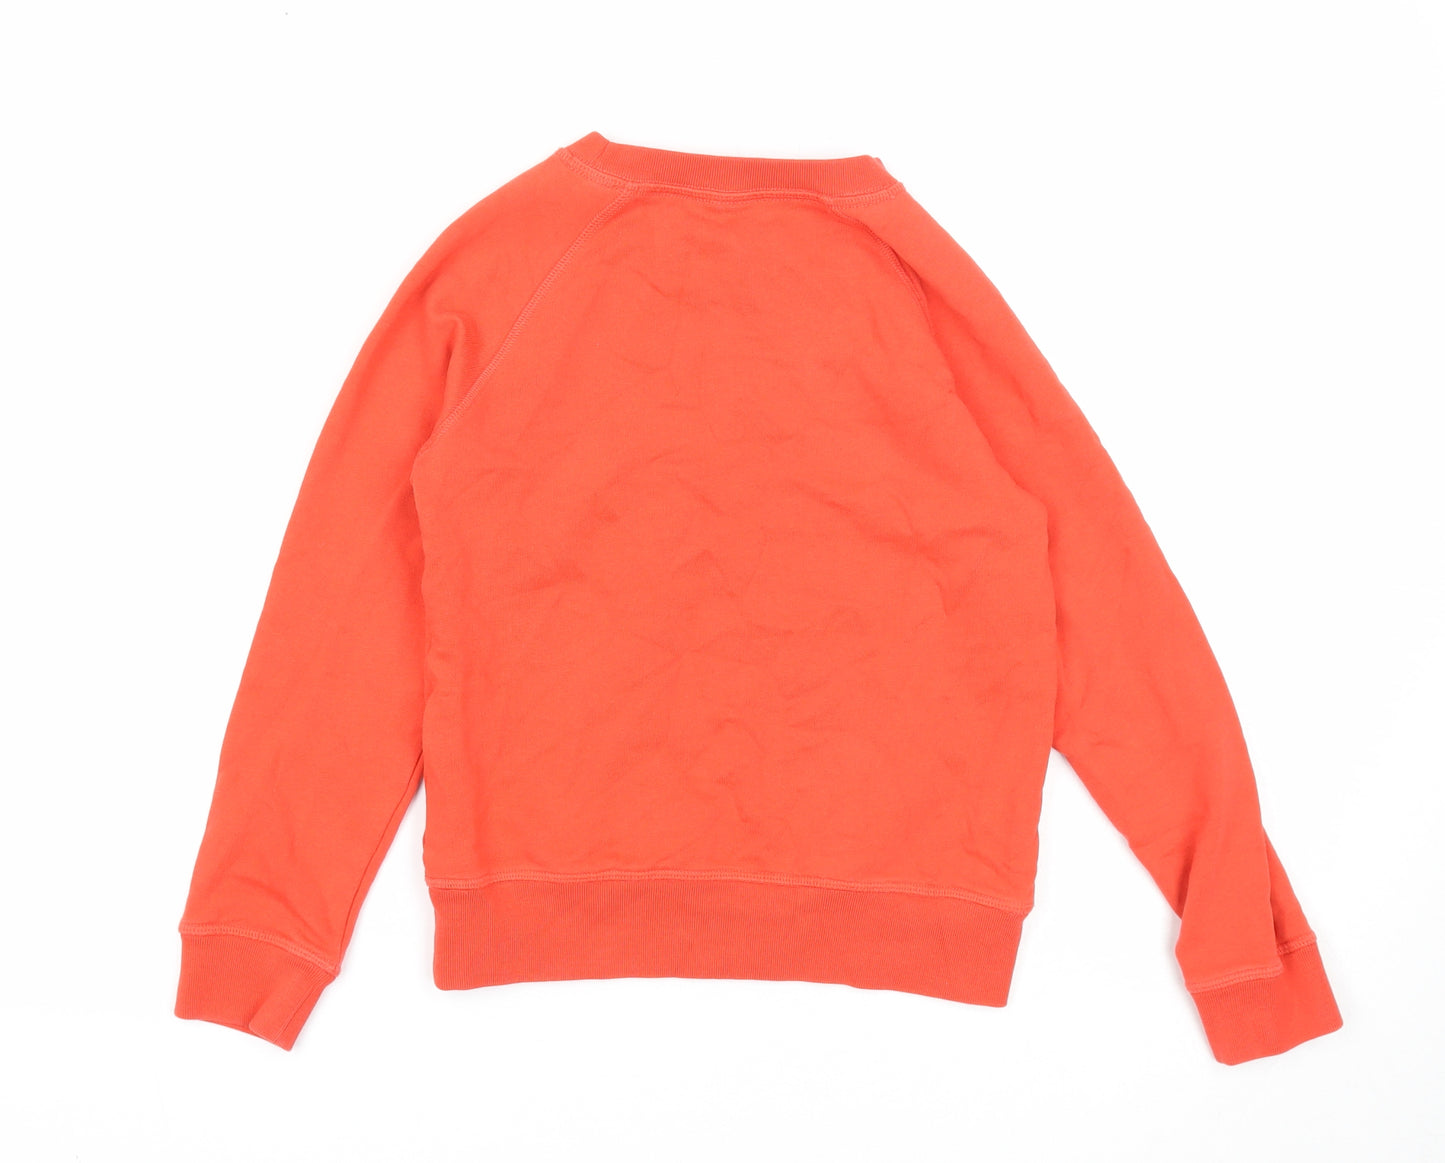 Preworn Boys Red Cotton Pullover Sweatshirt Size 7-8 Years Pullover